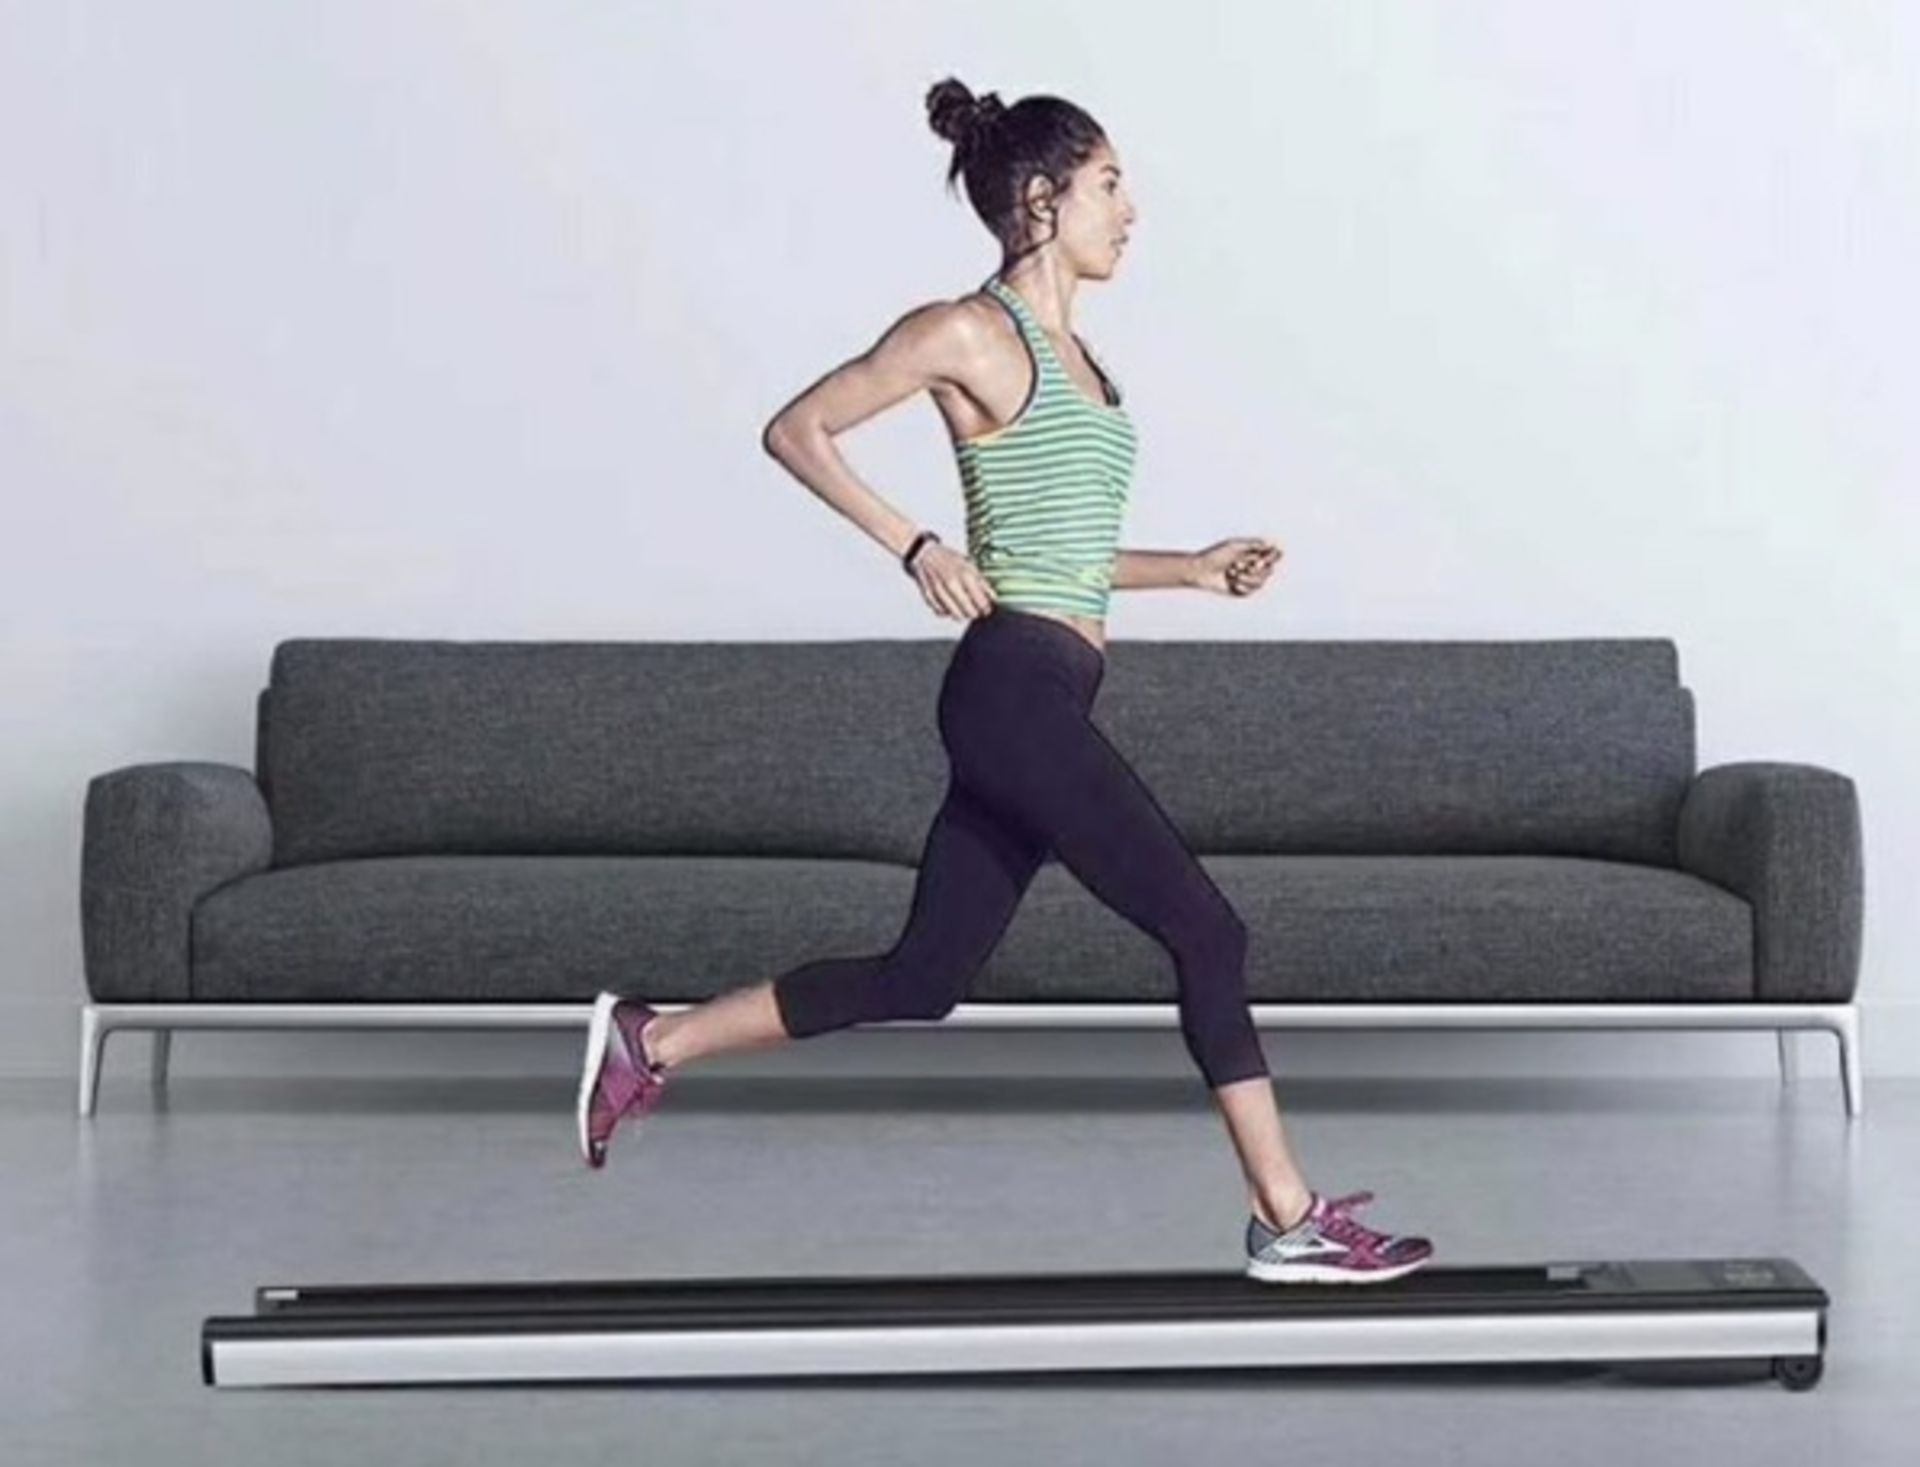 1 x Slim Tread Ultra Thin Smart Treadmill Running / Walking Machine - Lightweight With Folding - Image 6 of 8